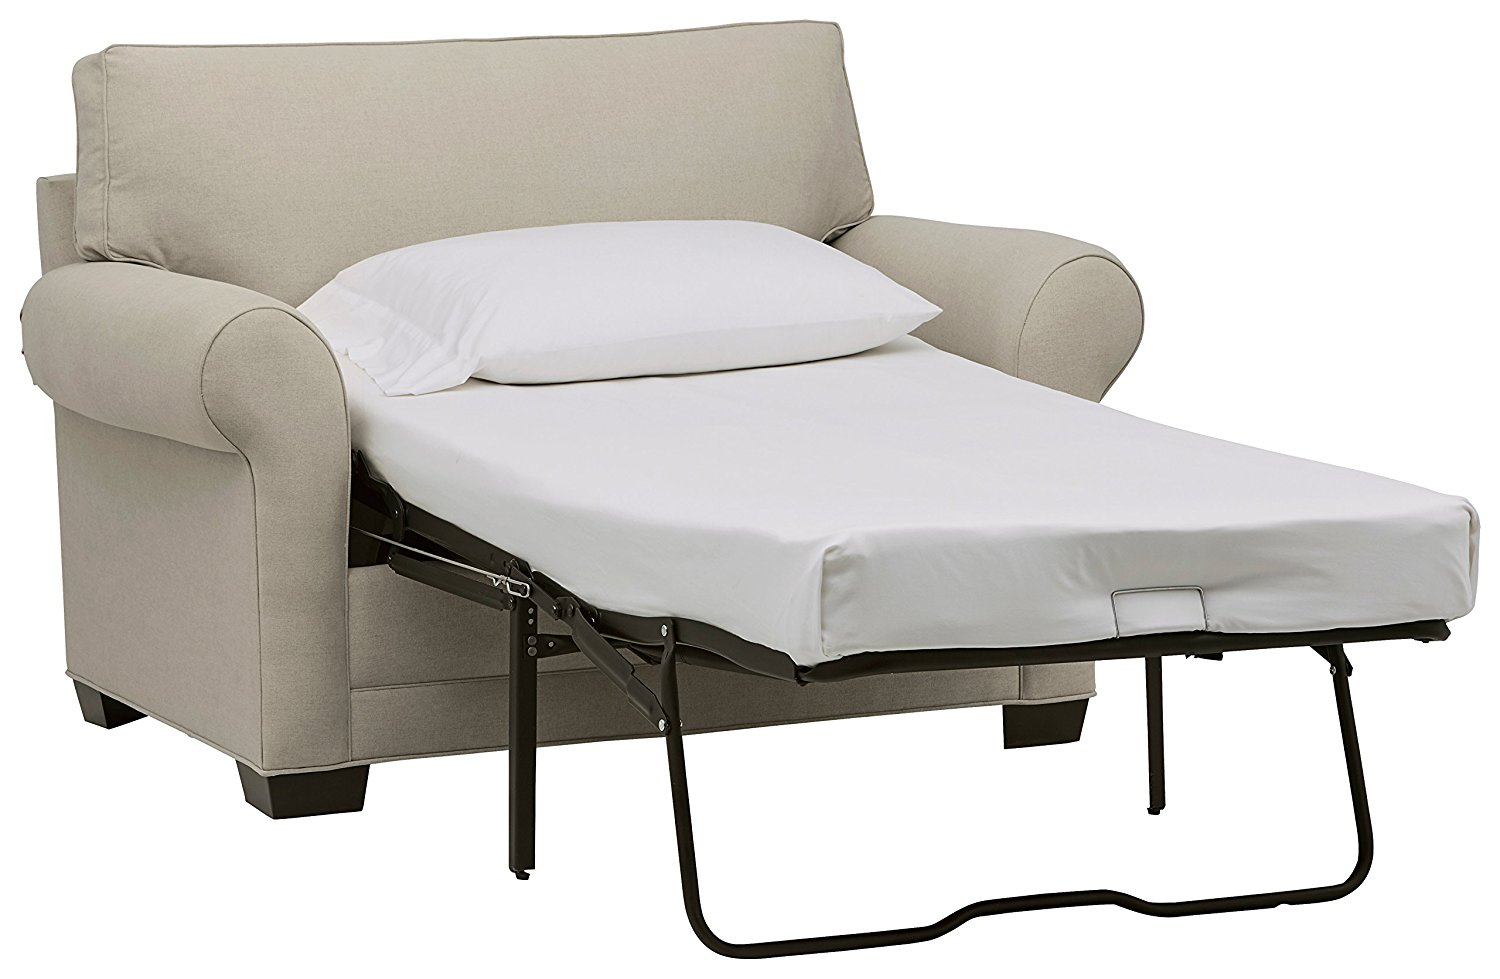 folding convertible single sleeper sofa bed chair canada